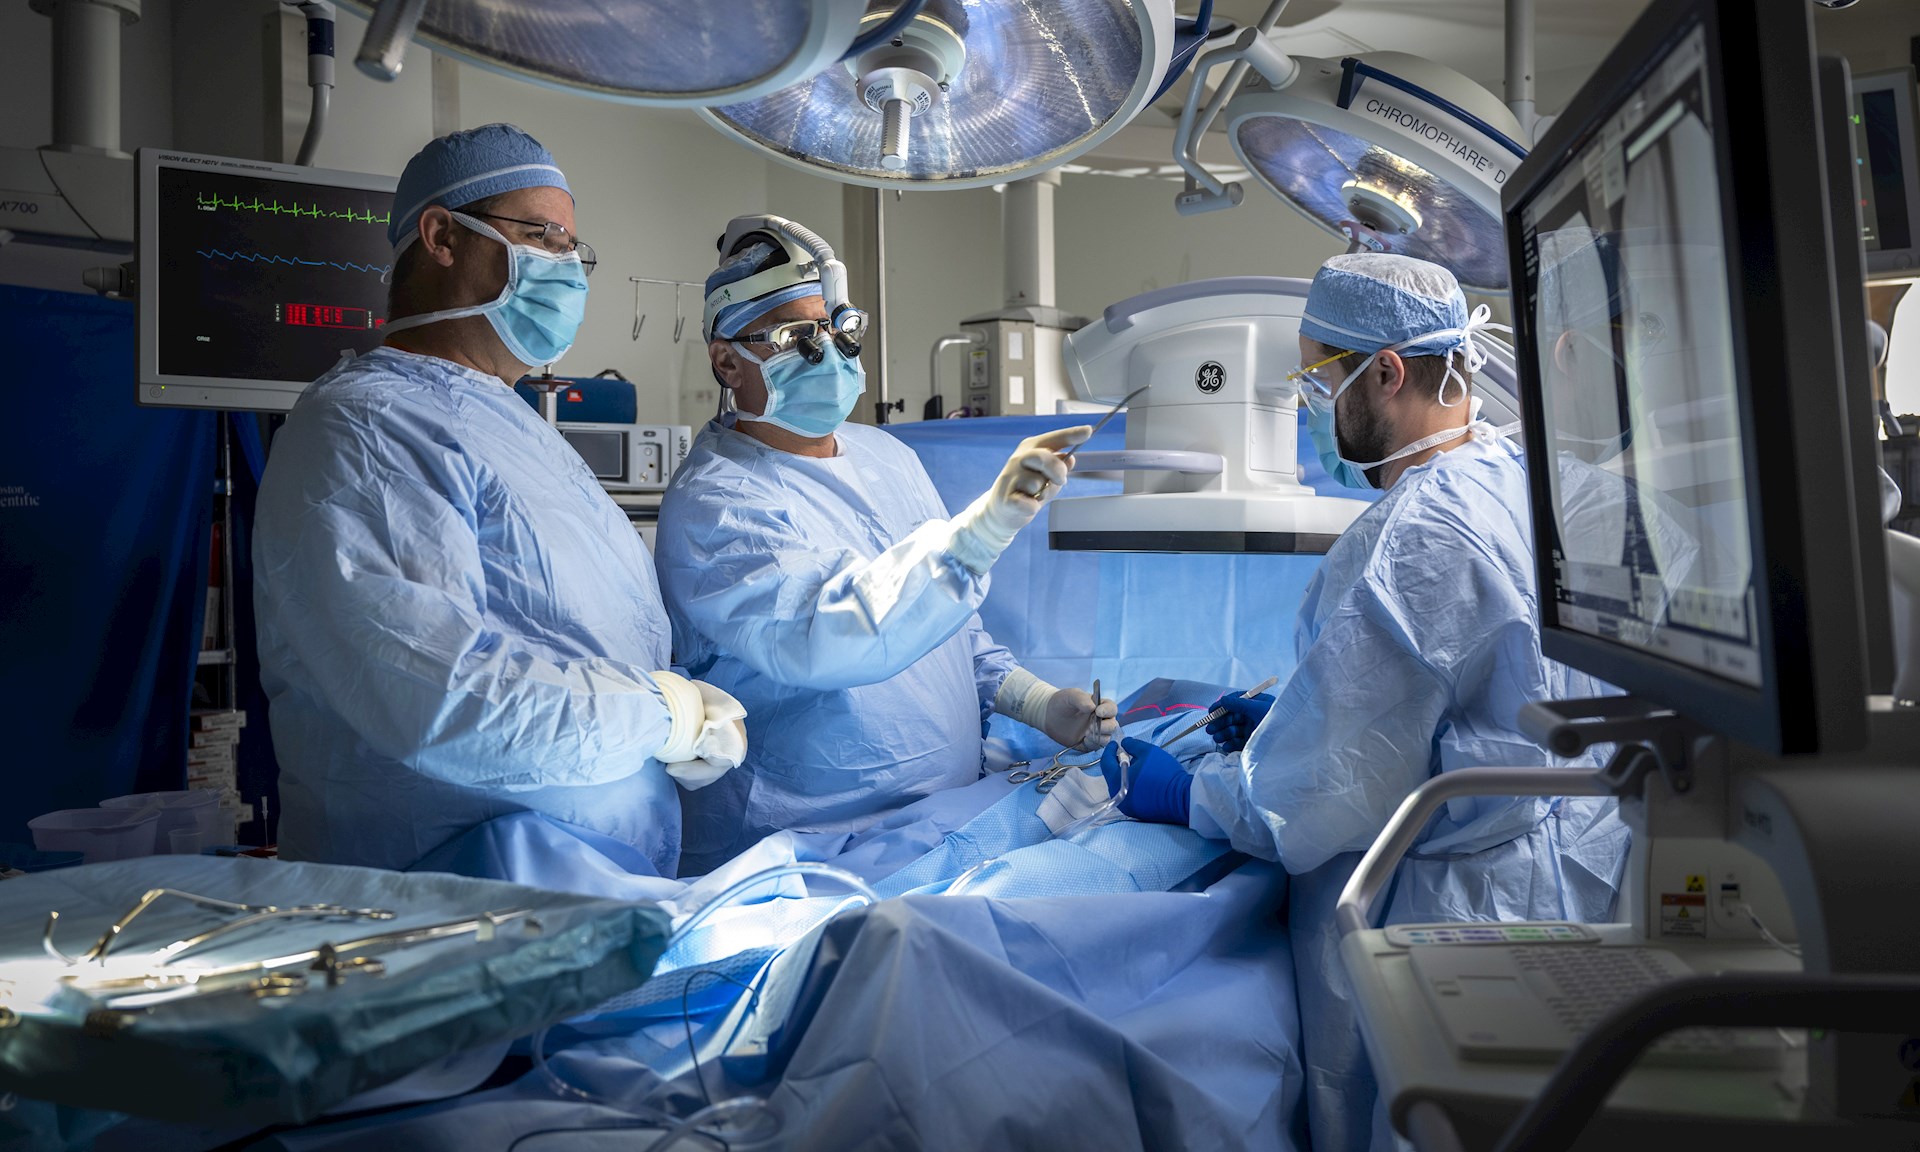 Our cardiac team works in the catheterization lab at WellSpan Good Samaritan Hospital.